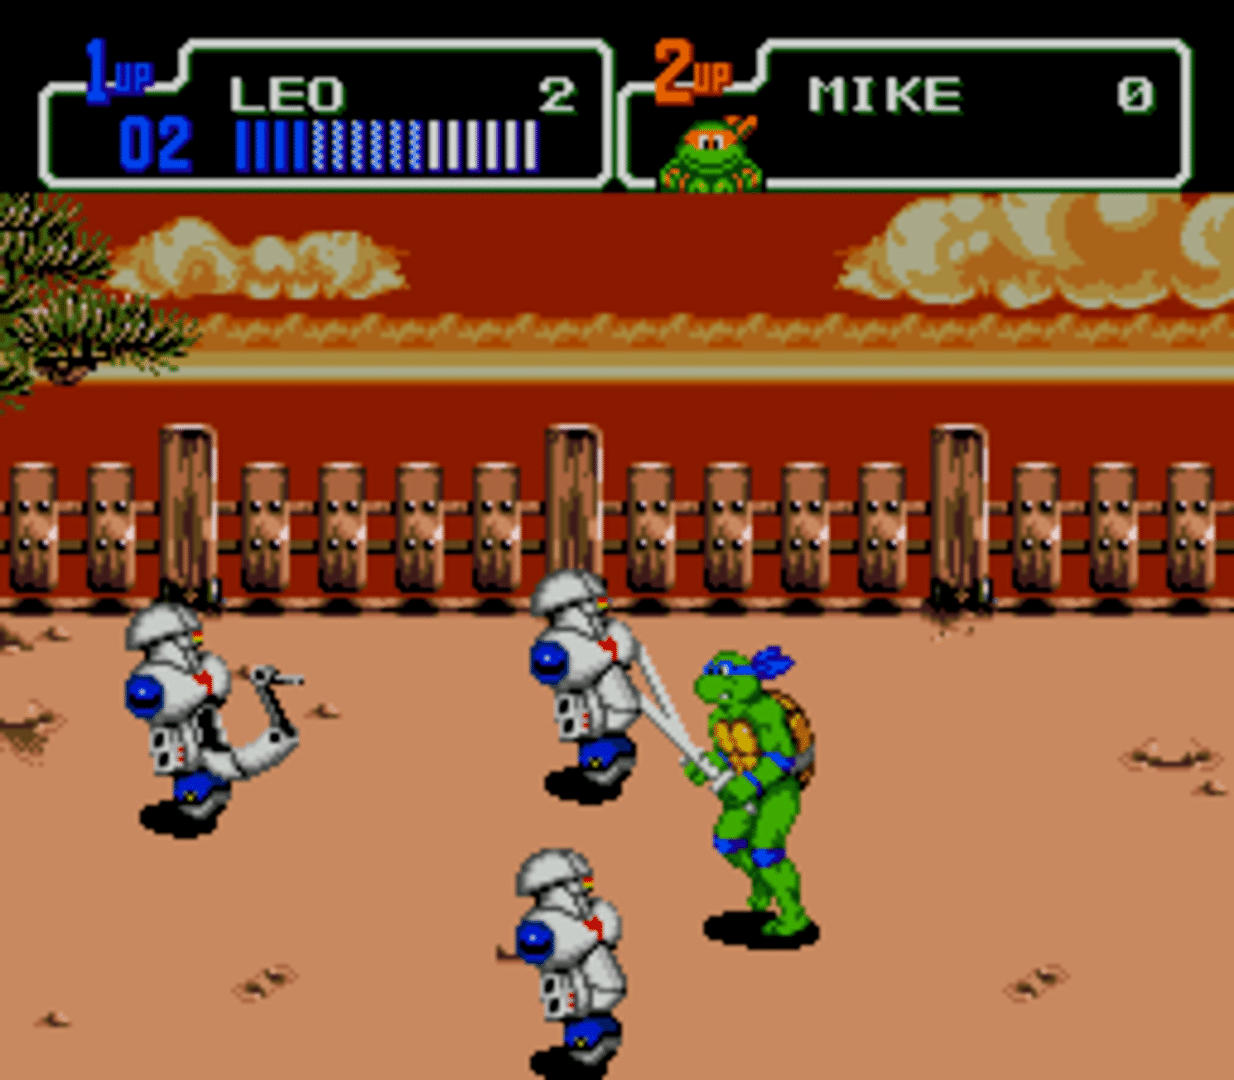 Teenage Mutant Ninja Turtles: The HyperStone Heist screenshot